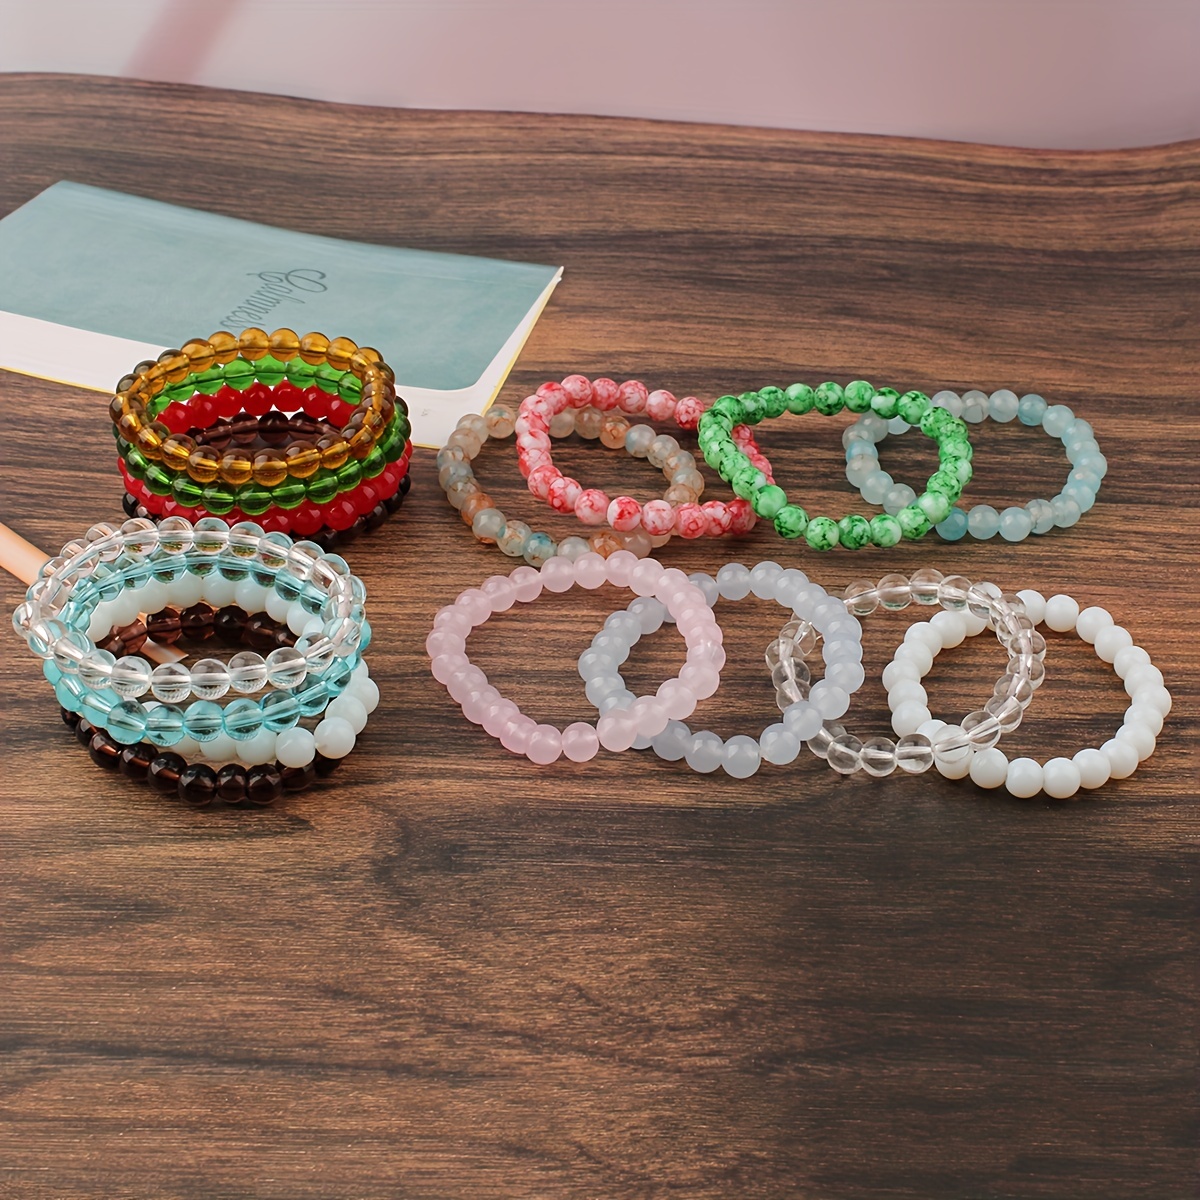 Enamel Tile Beads, Rounded Dome 2-hole Beads for Color Blocked Bracelets,  Trendy Tila Jewelry Making Supplies, Friendship Bracelet, 5 Pcs 